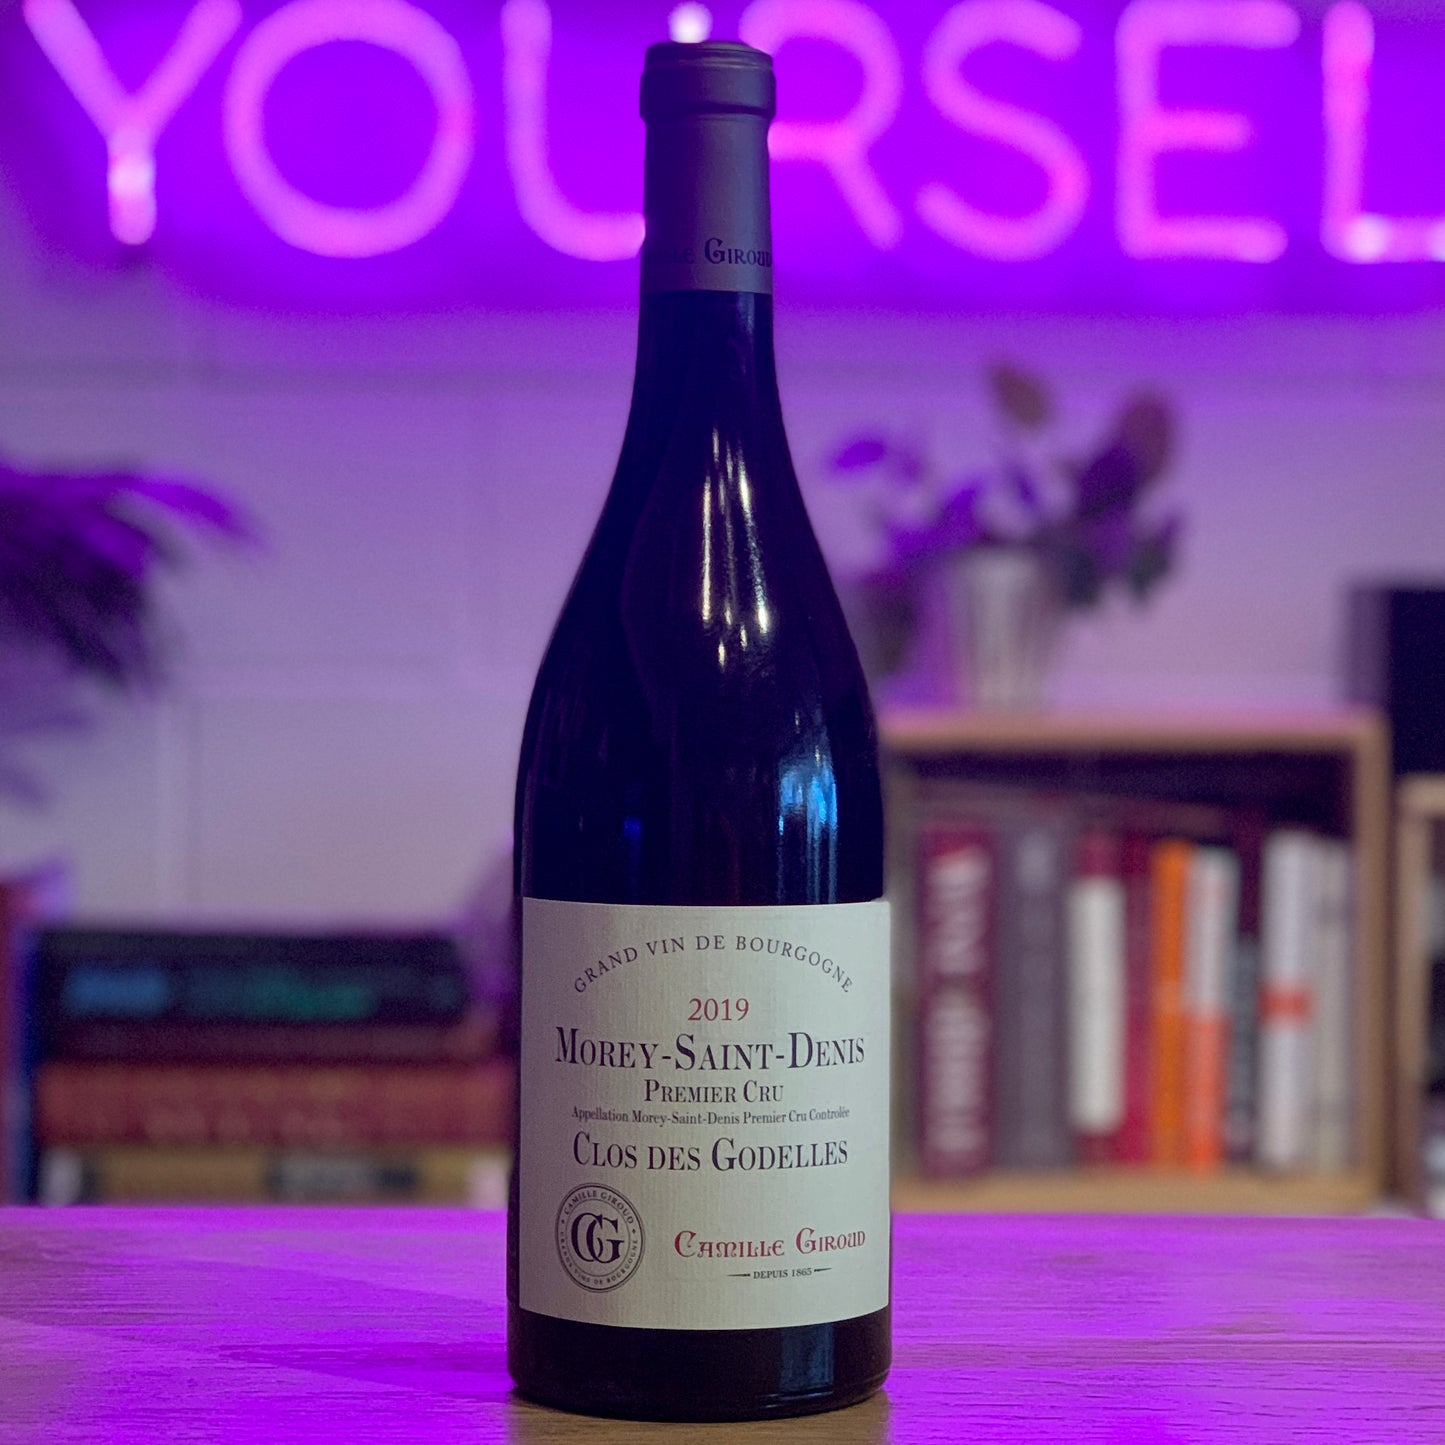 Buy Clos Mont-Blanc Únic Merlot 2019. Spanish red wine